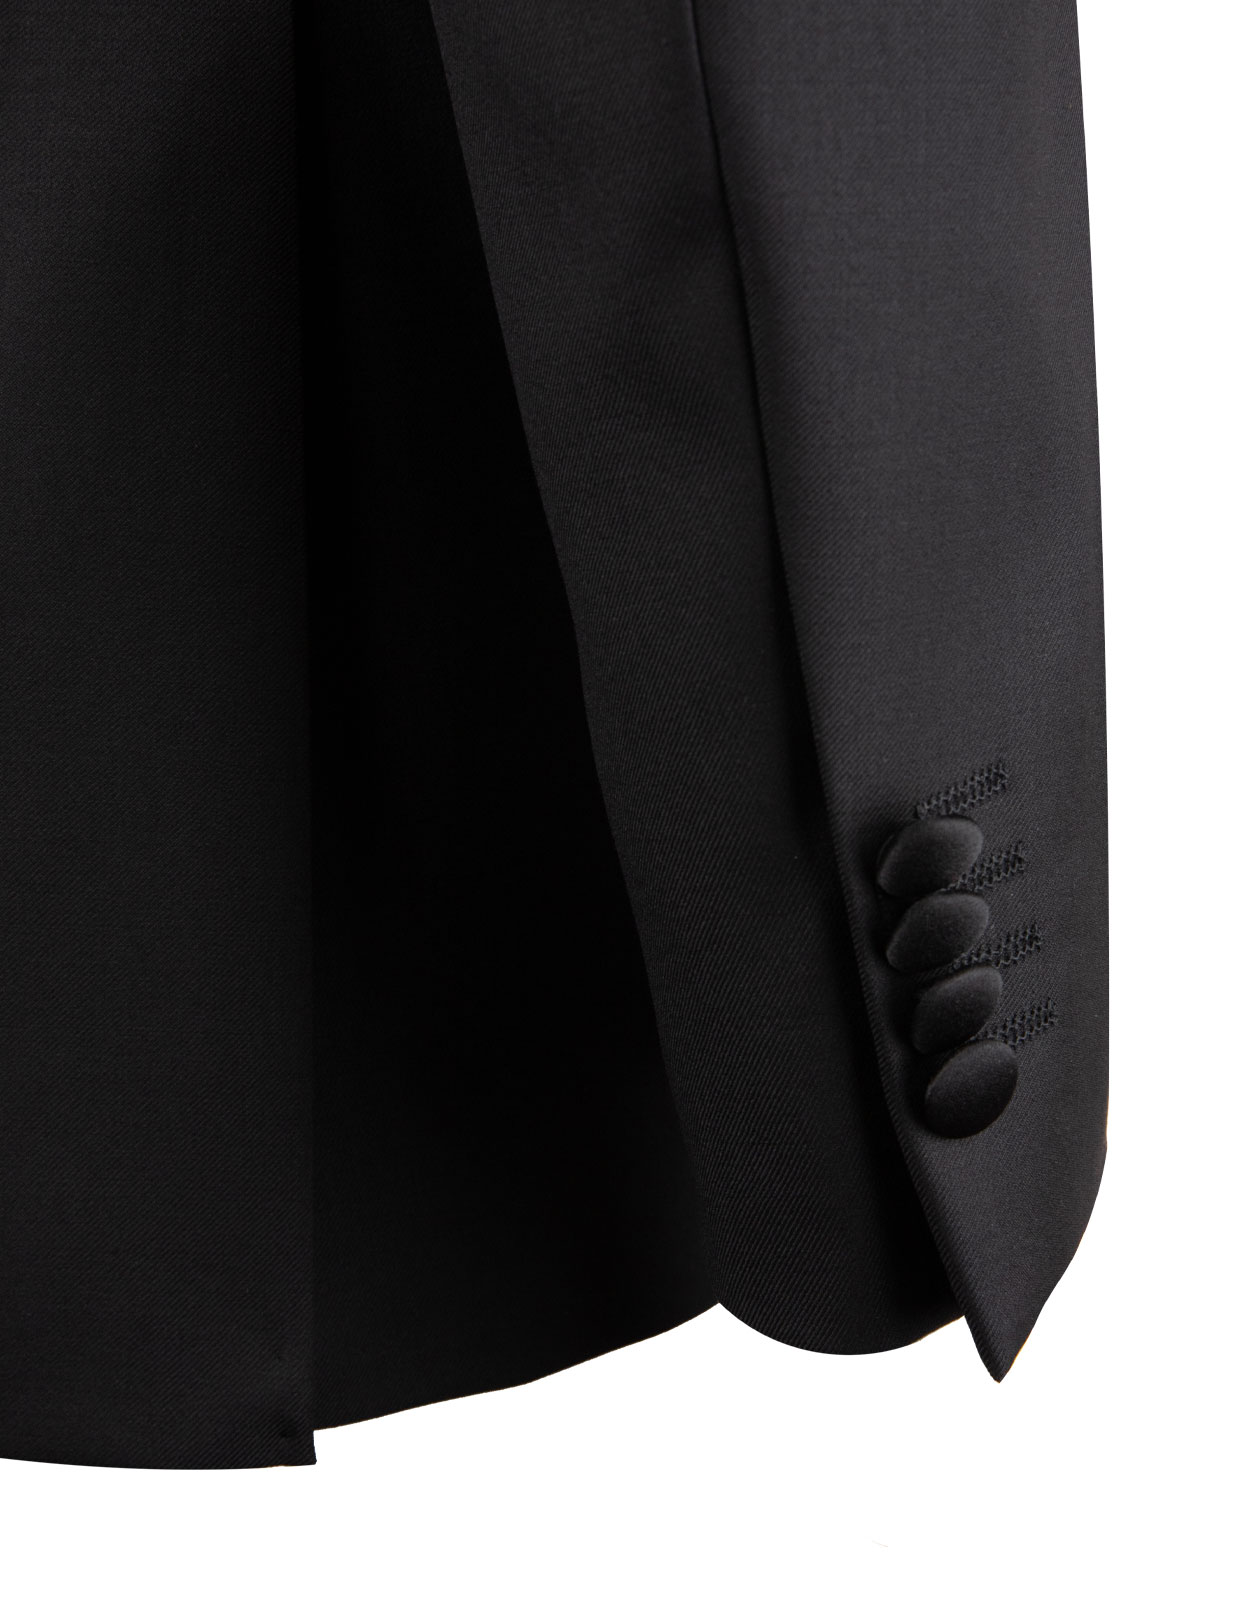 Tuxedo Shawl Jacket Mix & Match Black Stl 150